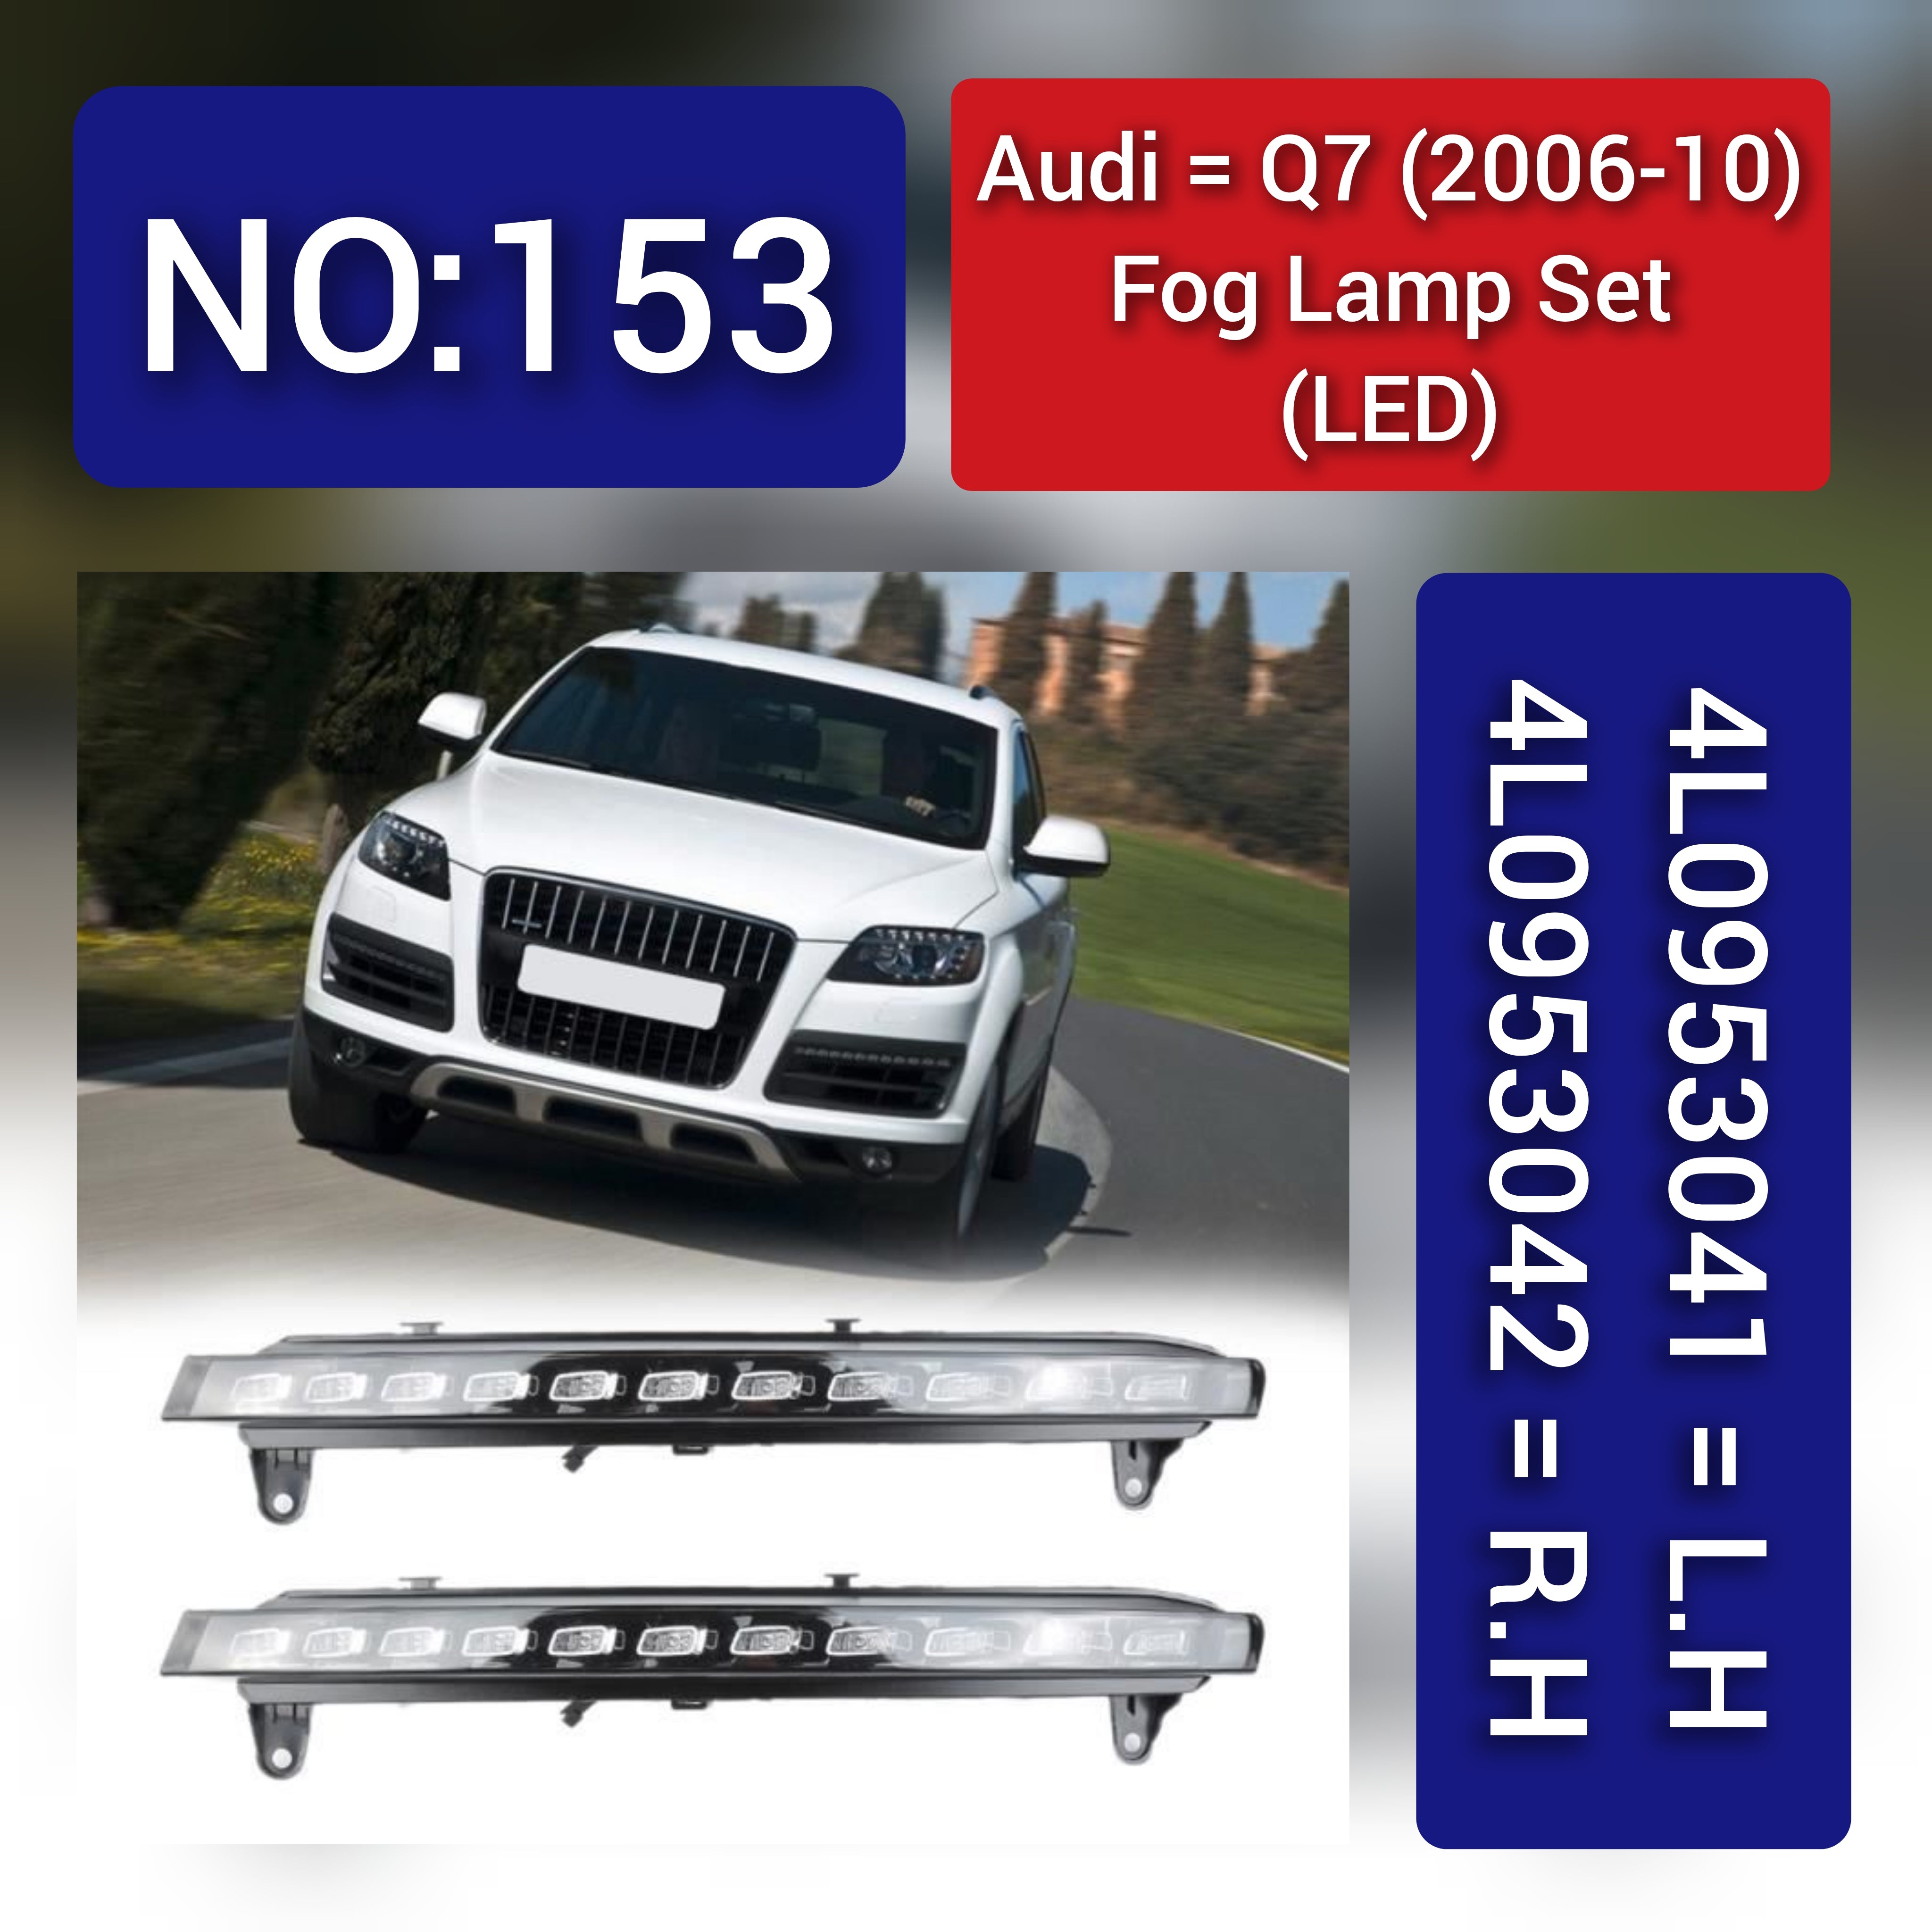 Audi FRONT BUMPER SIGNAL LIGHT INDICATOR Compatible With AUDI Q7 (2006-2010) LED Left 4L0953041 & Right 4L0953042 Tag-FO-153